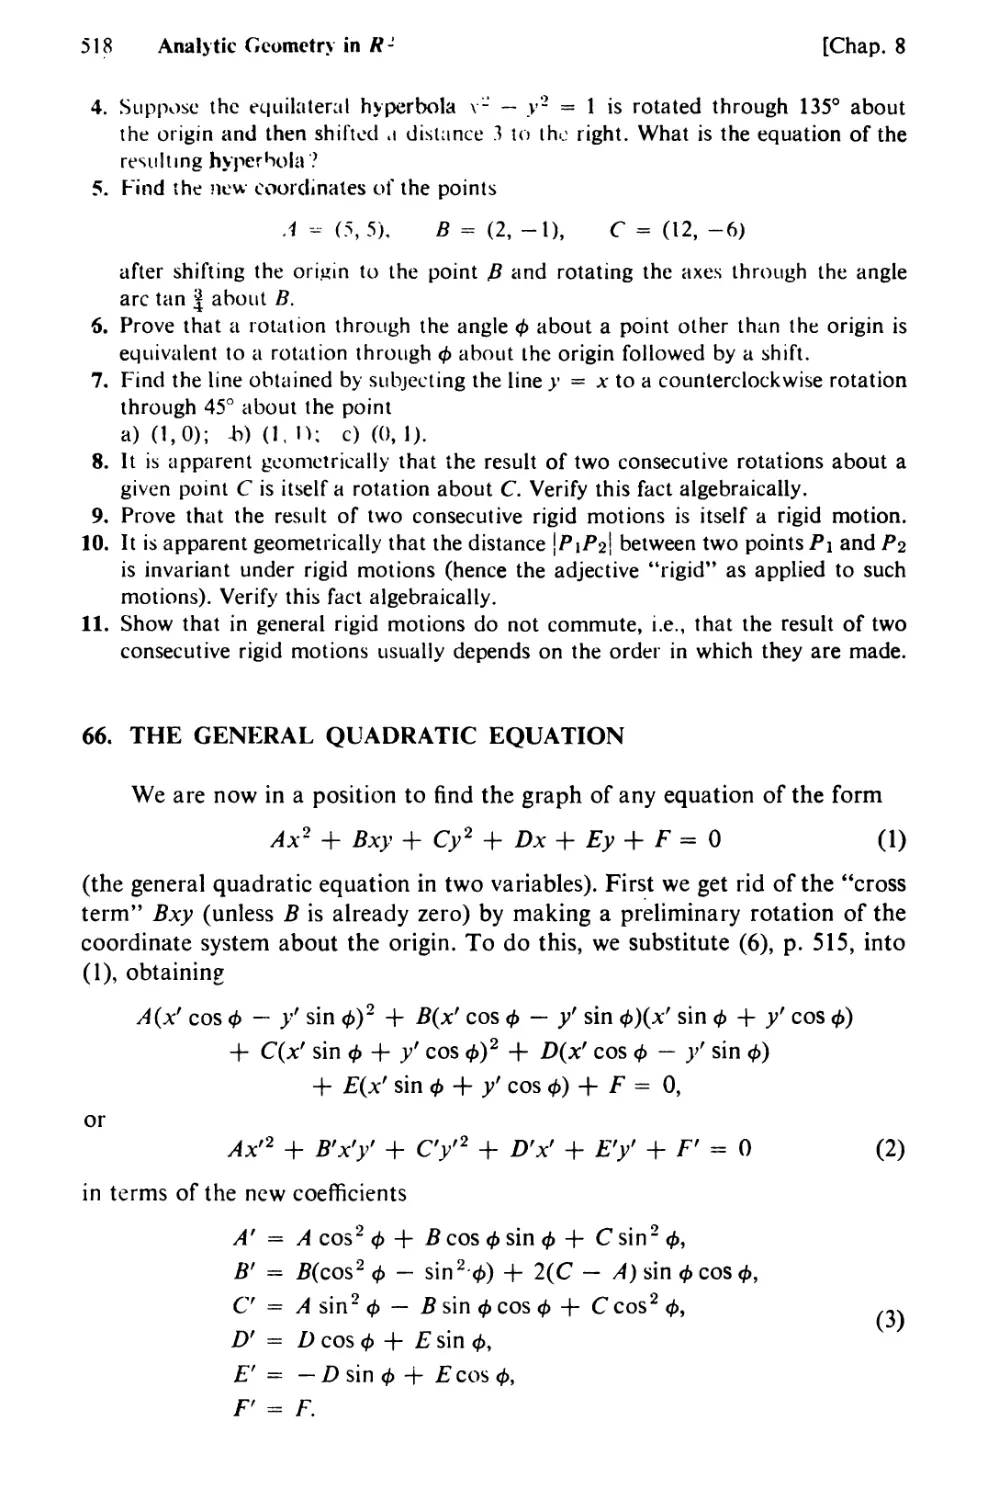 66. The General Quadratic Equation